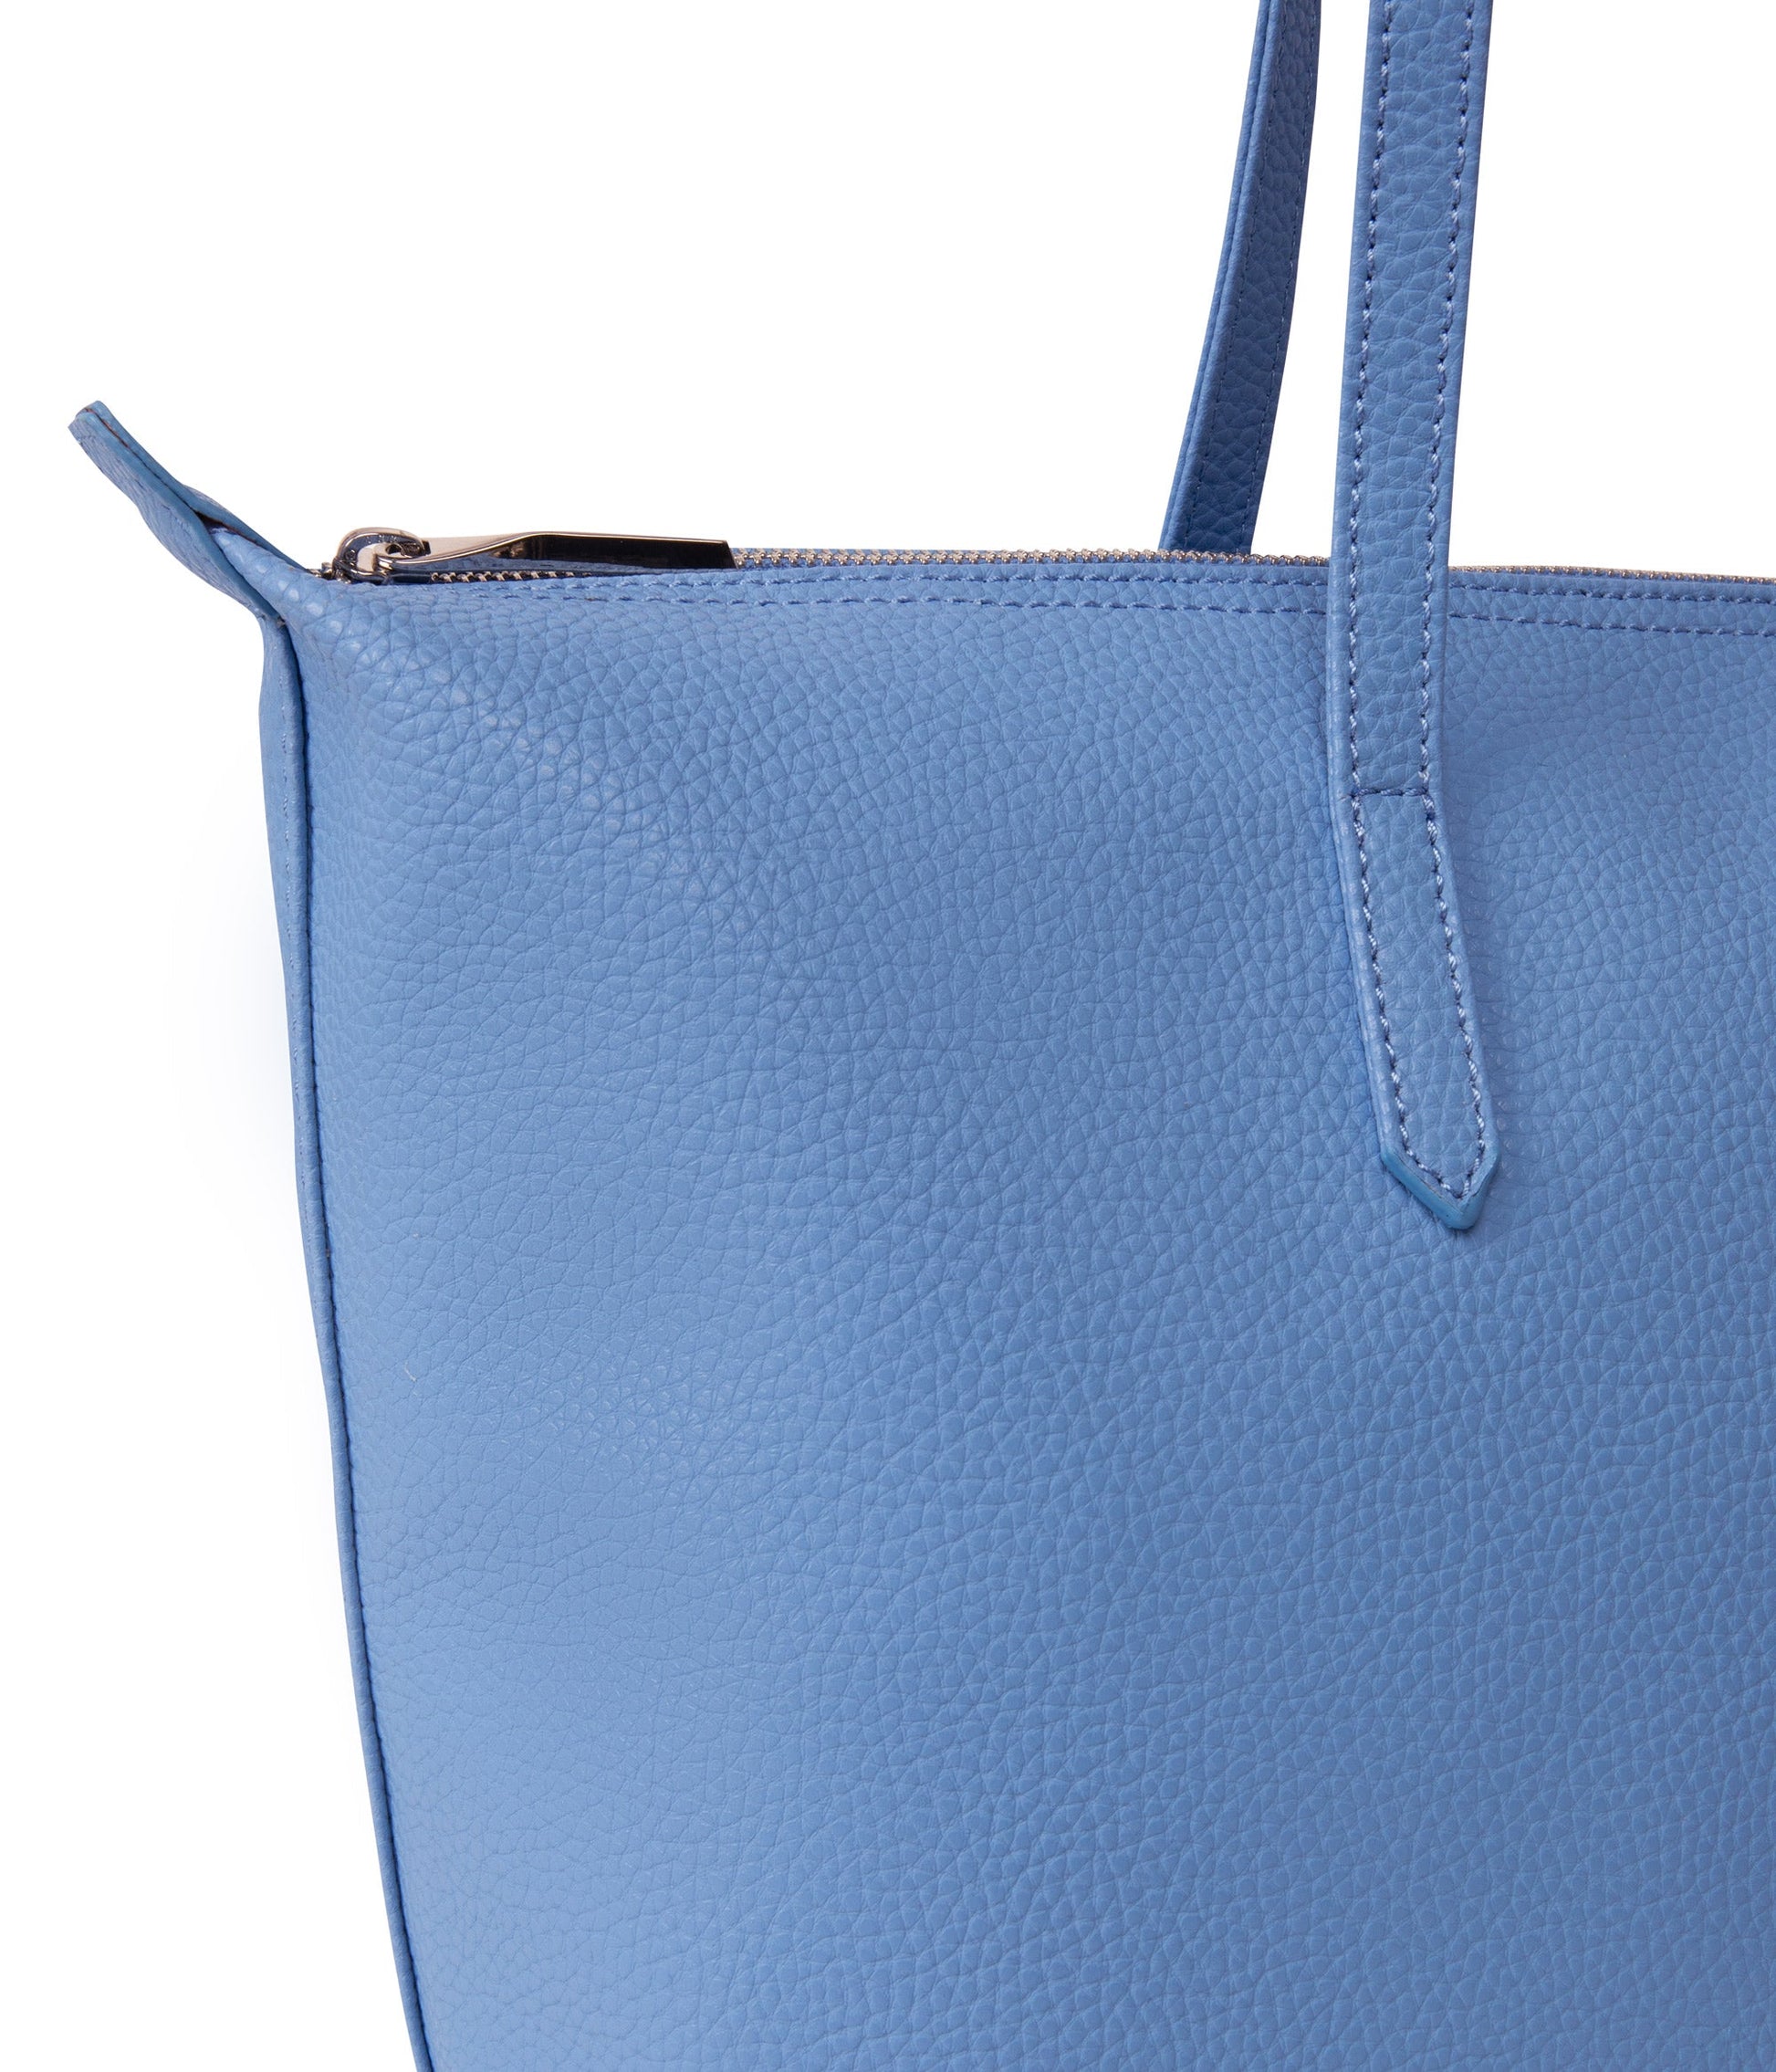 ABBI Vegan Tote Bag - Purity | Color: Blue - variant::coast